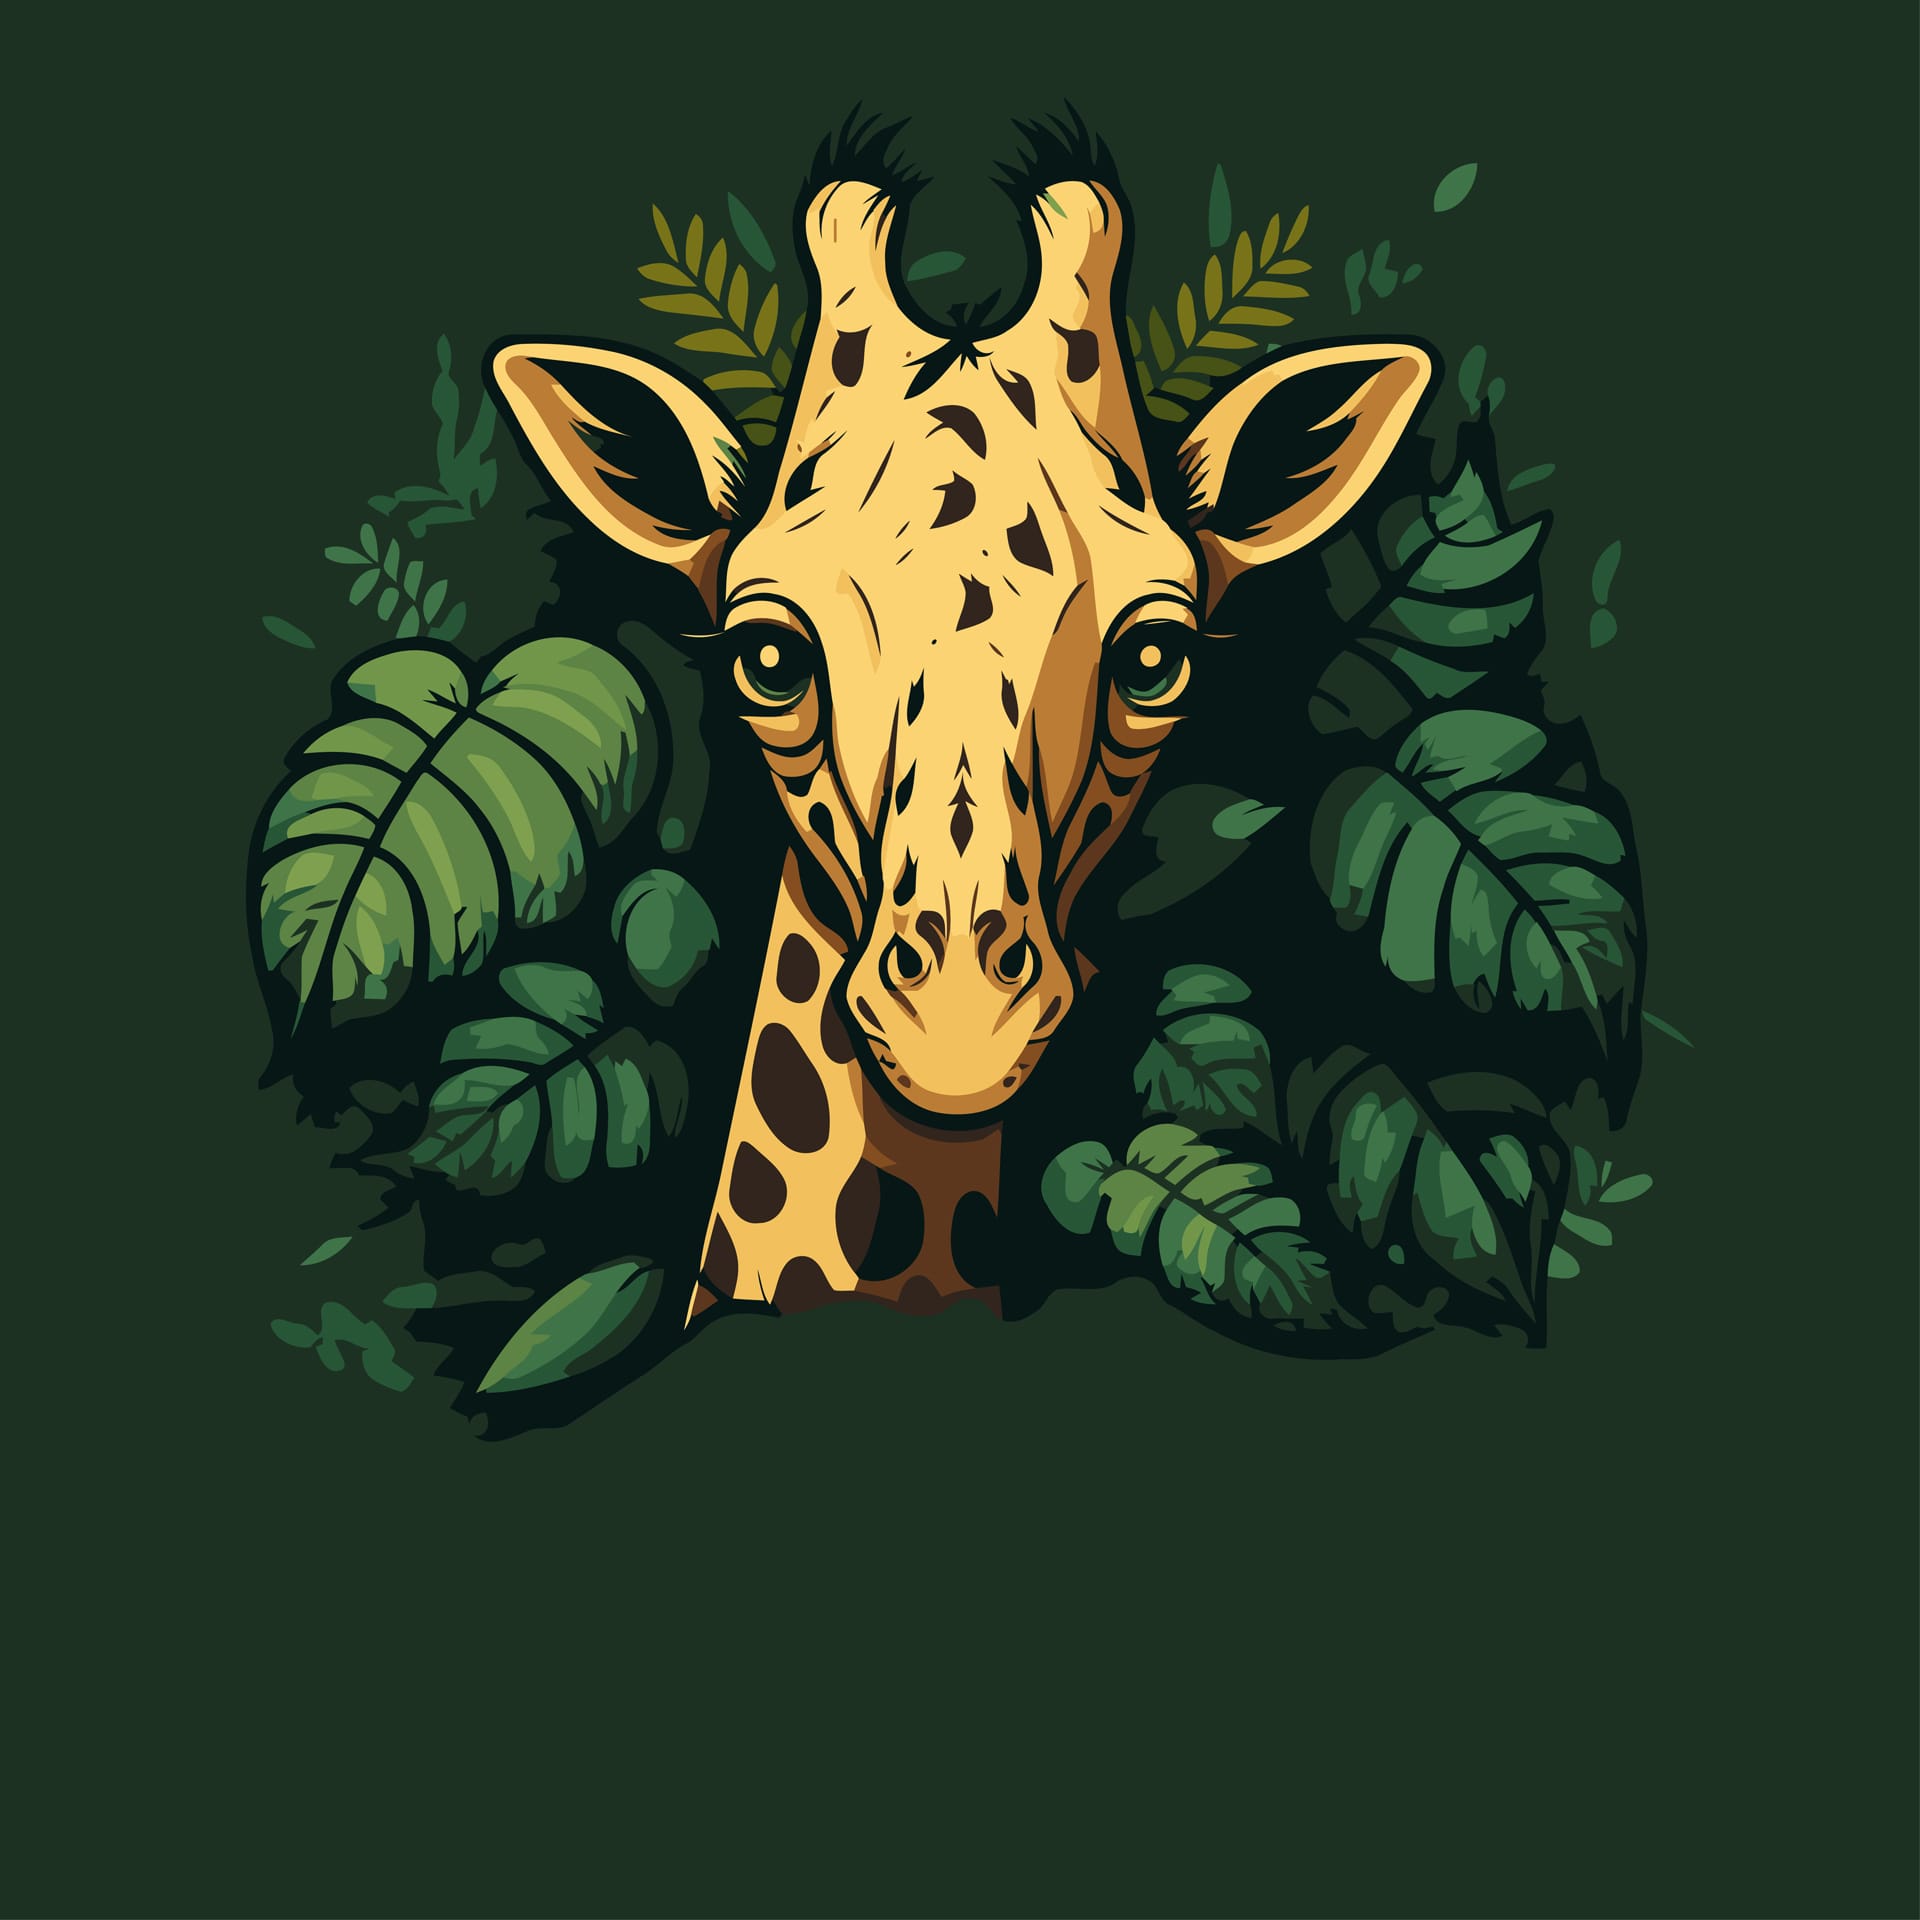 Giraffe logo animal character logo mascot cartoon design template image